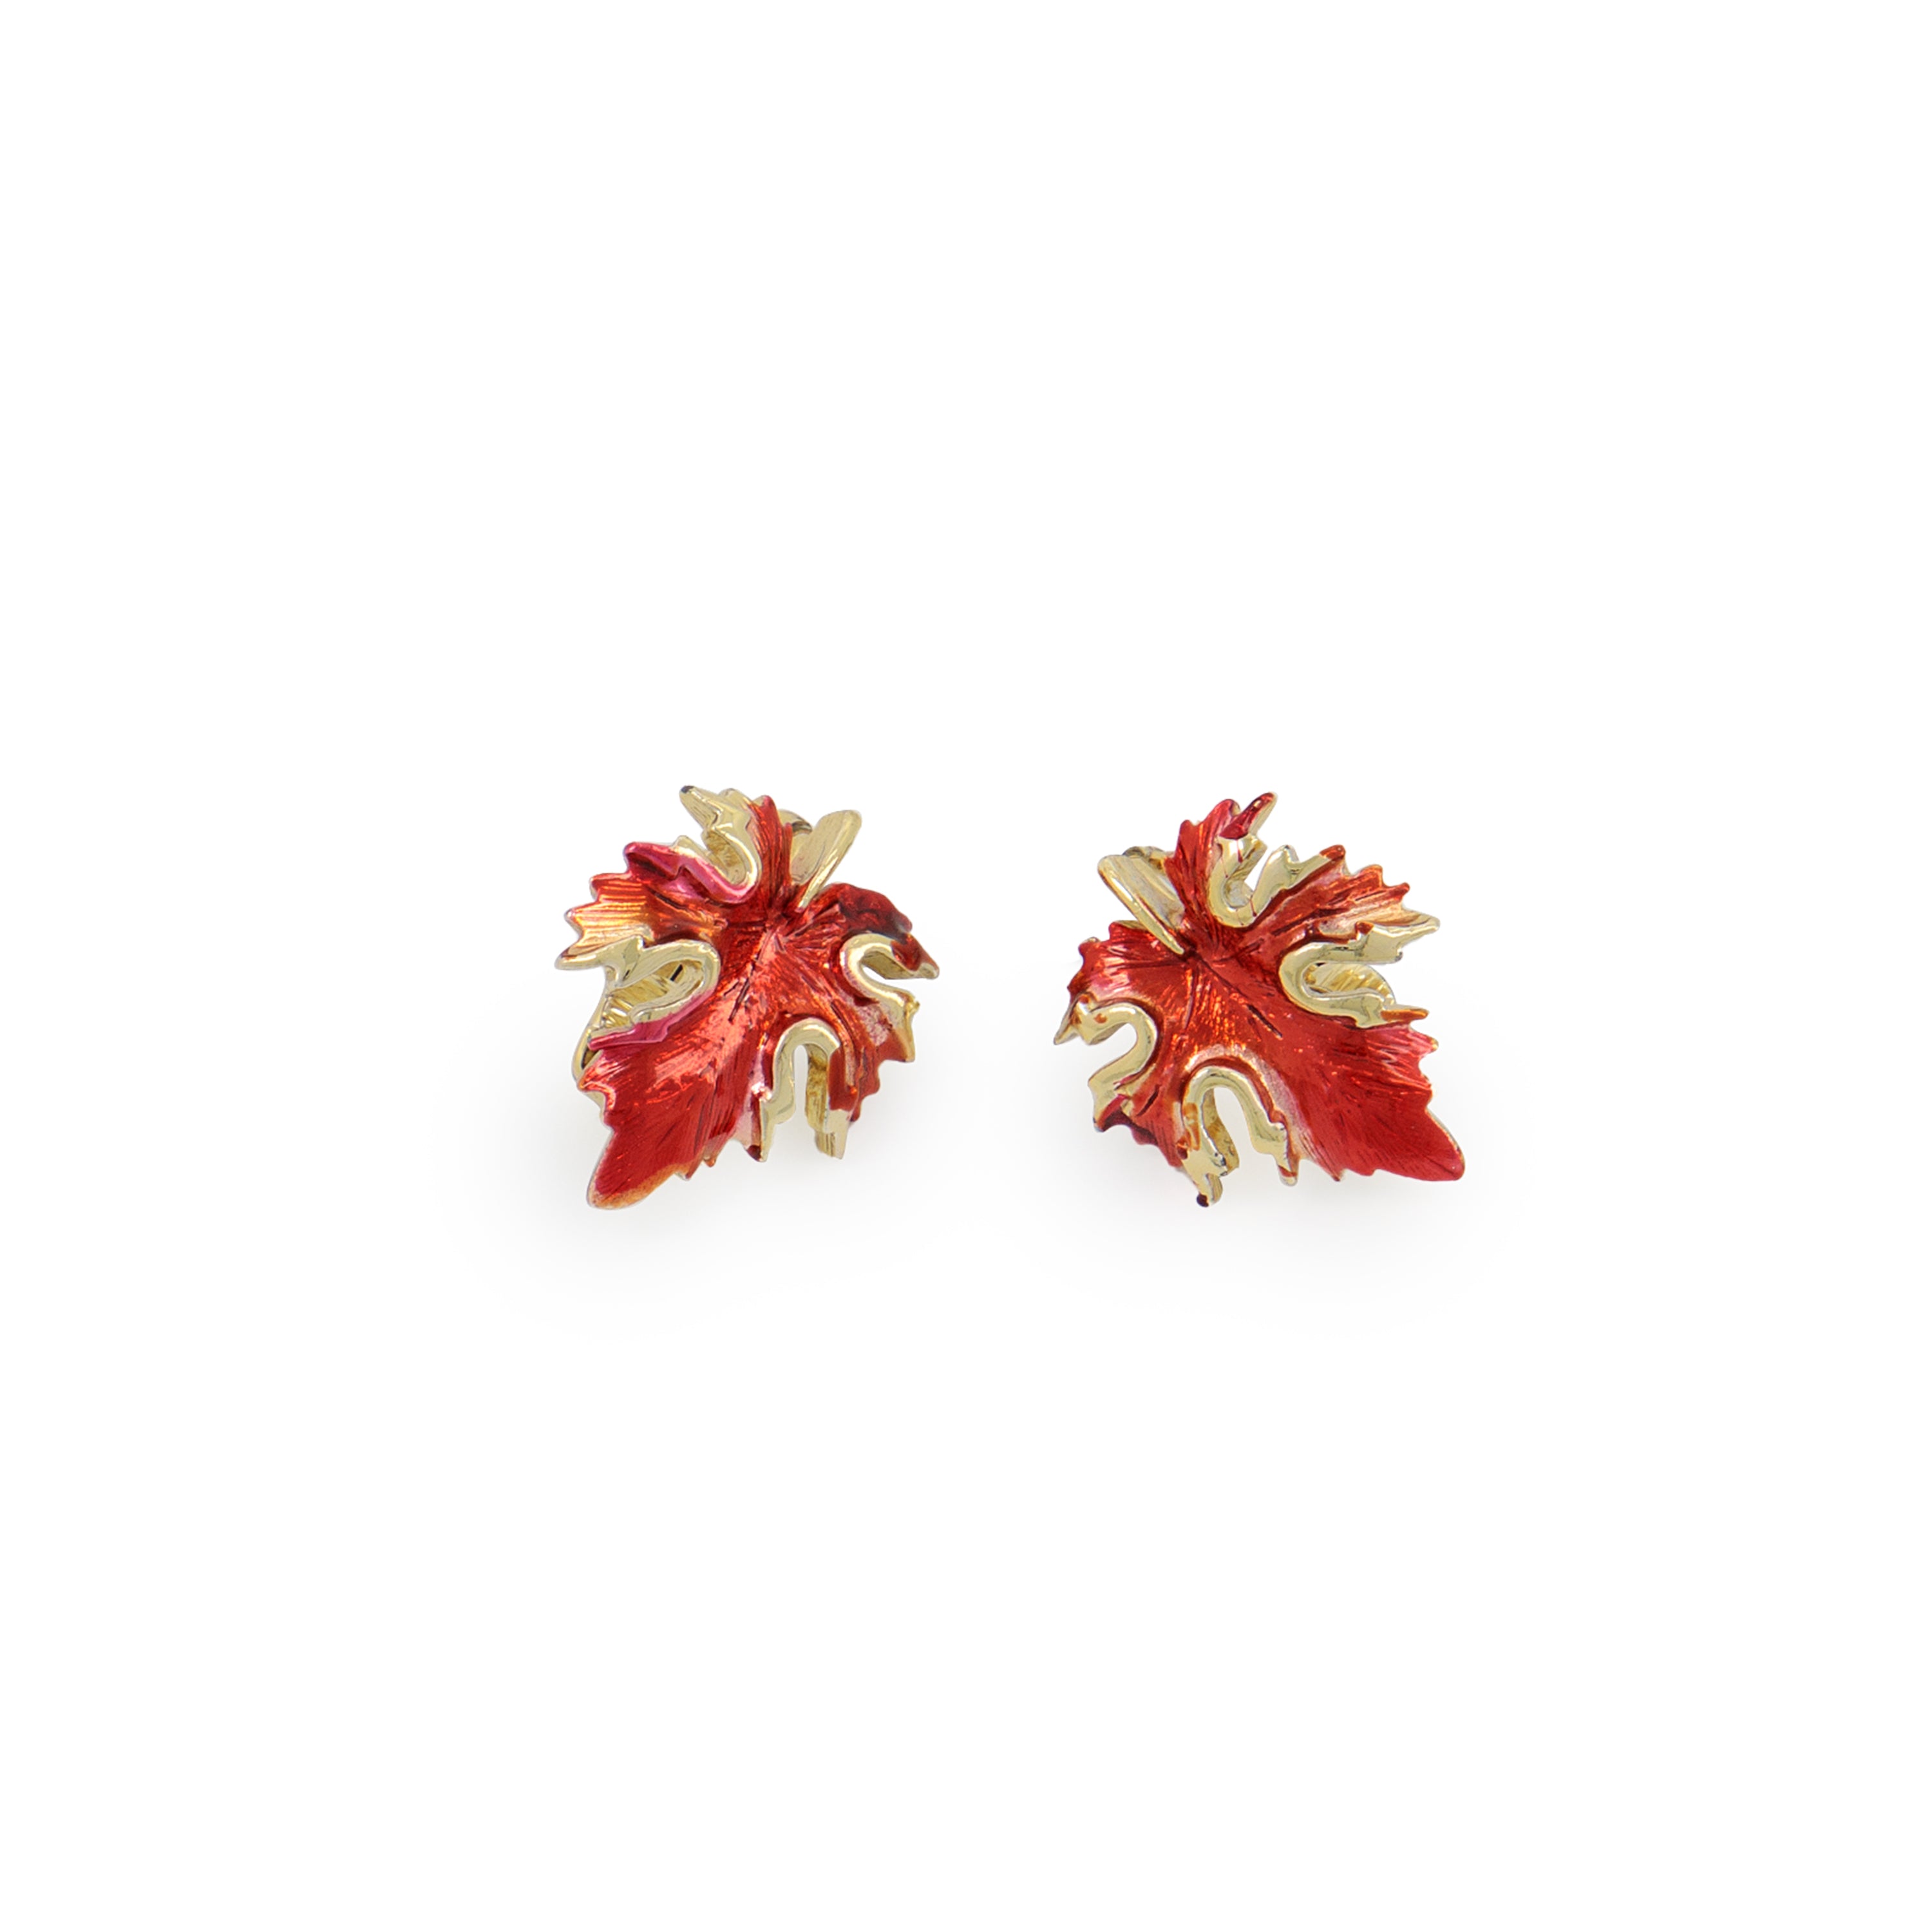 Vintage costume maple leaf clip earrings